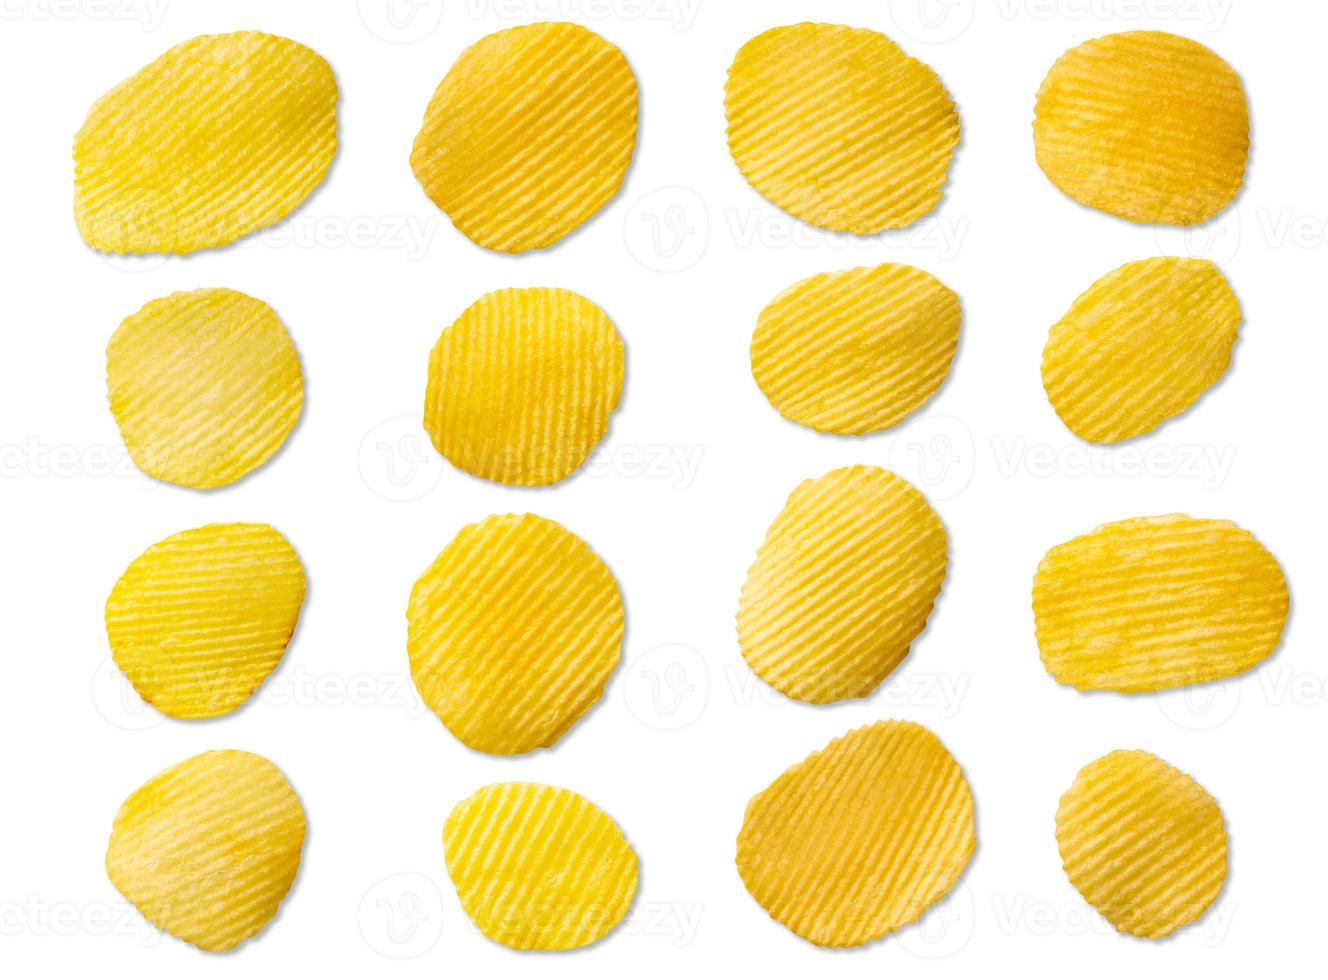 batatas fritas isoladas no fundo branco foto